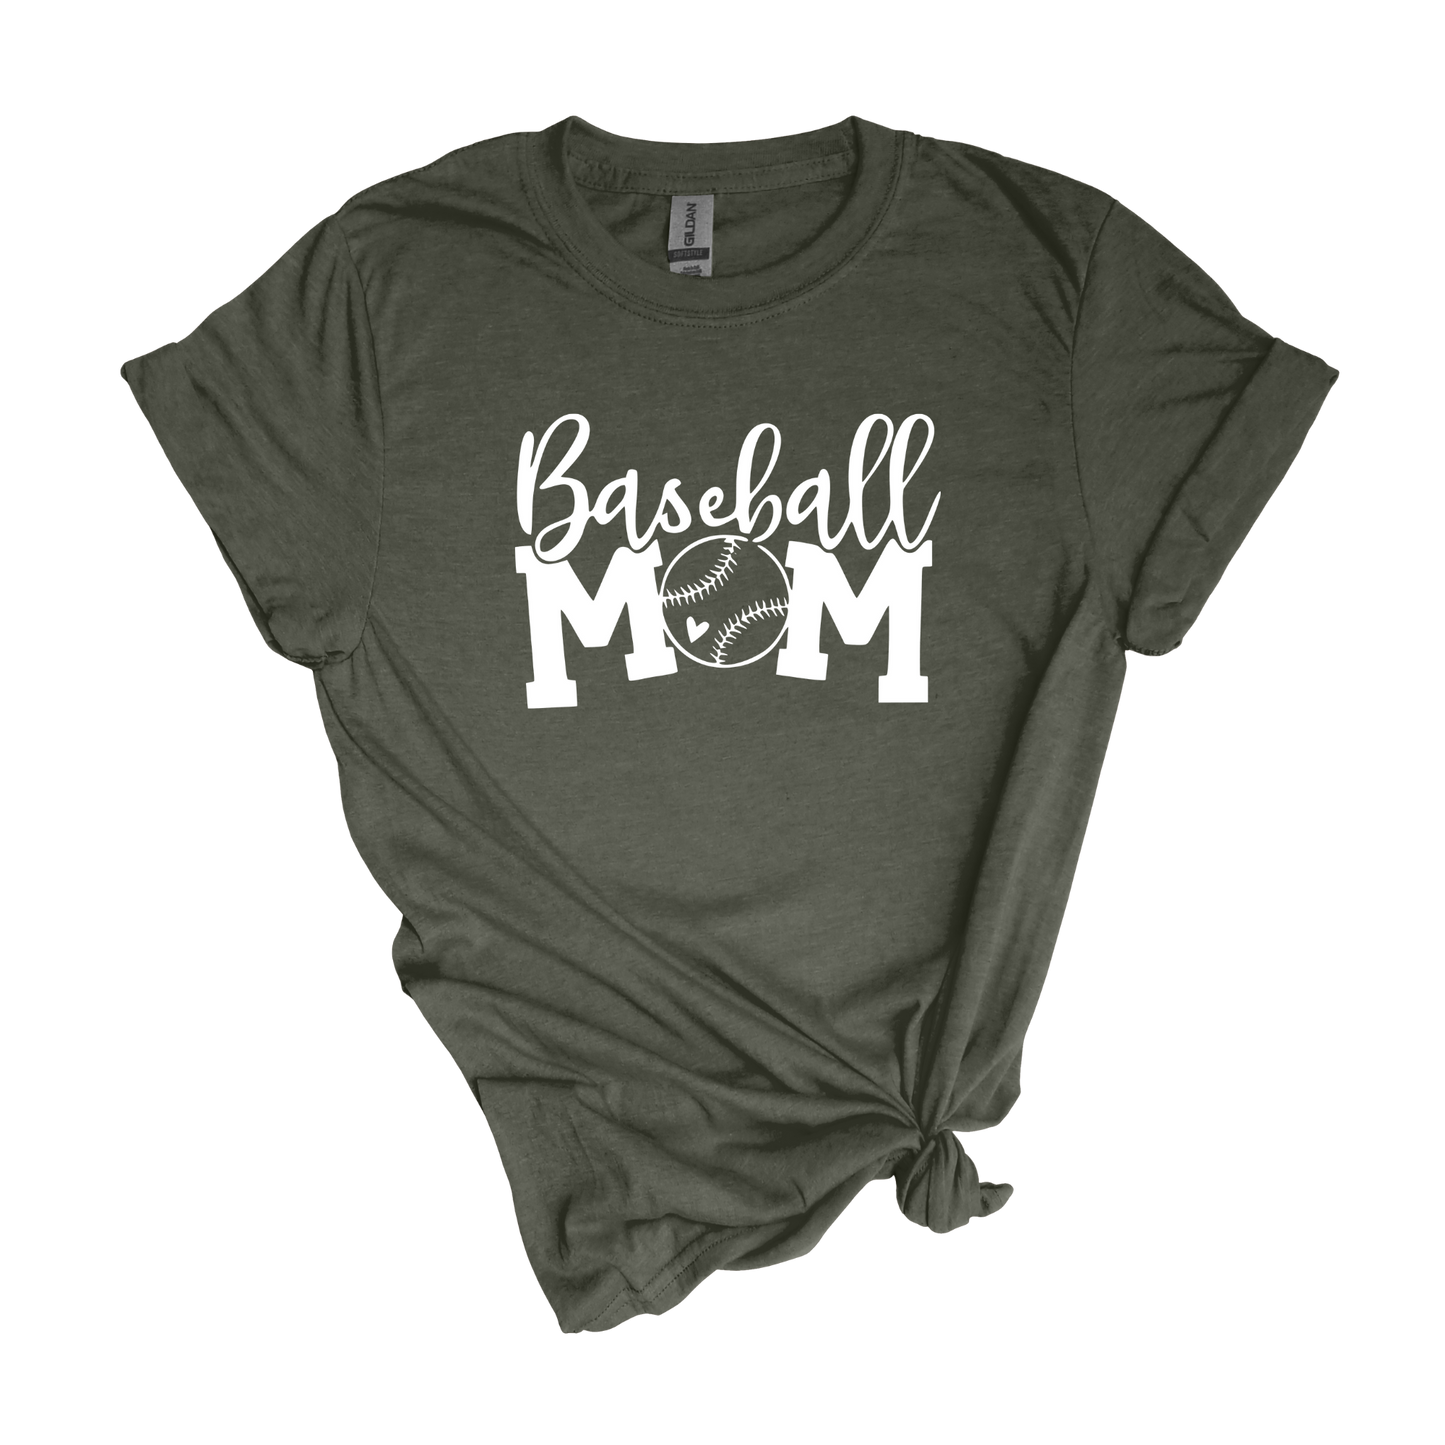 Baseball Mom - Adult Unisex Soft T-shirt